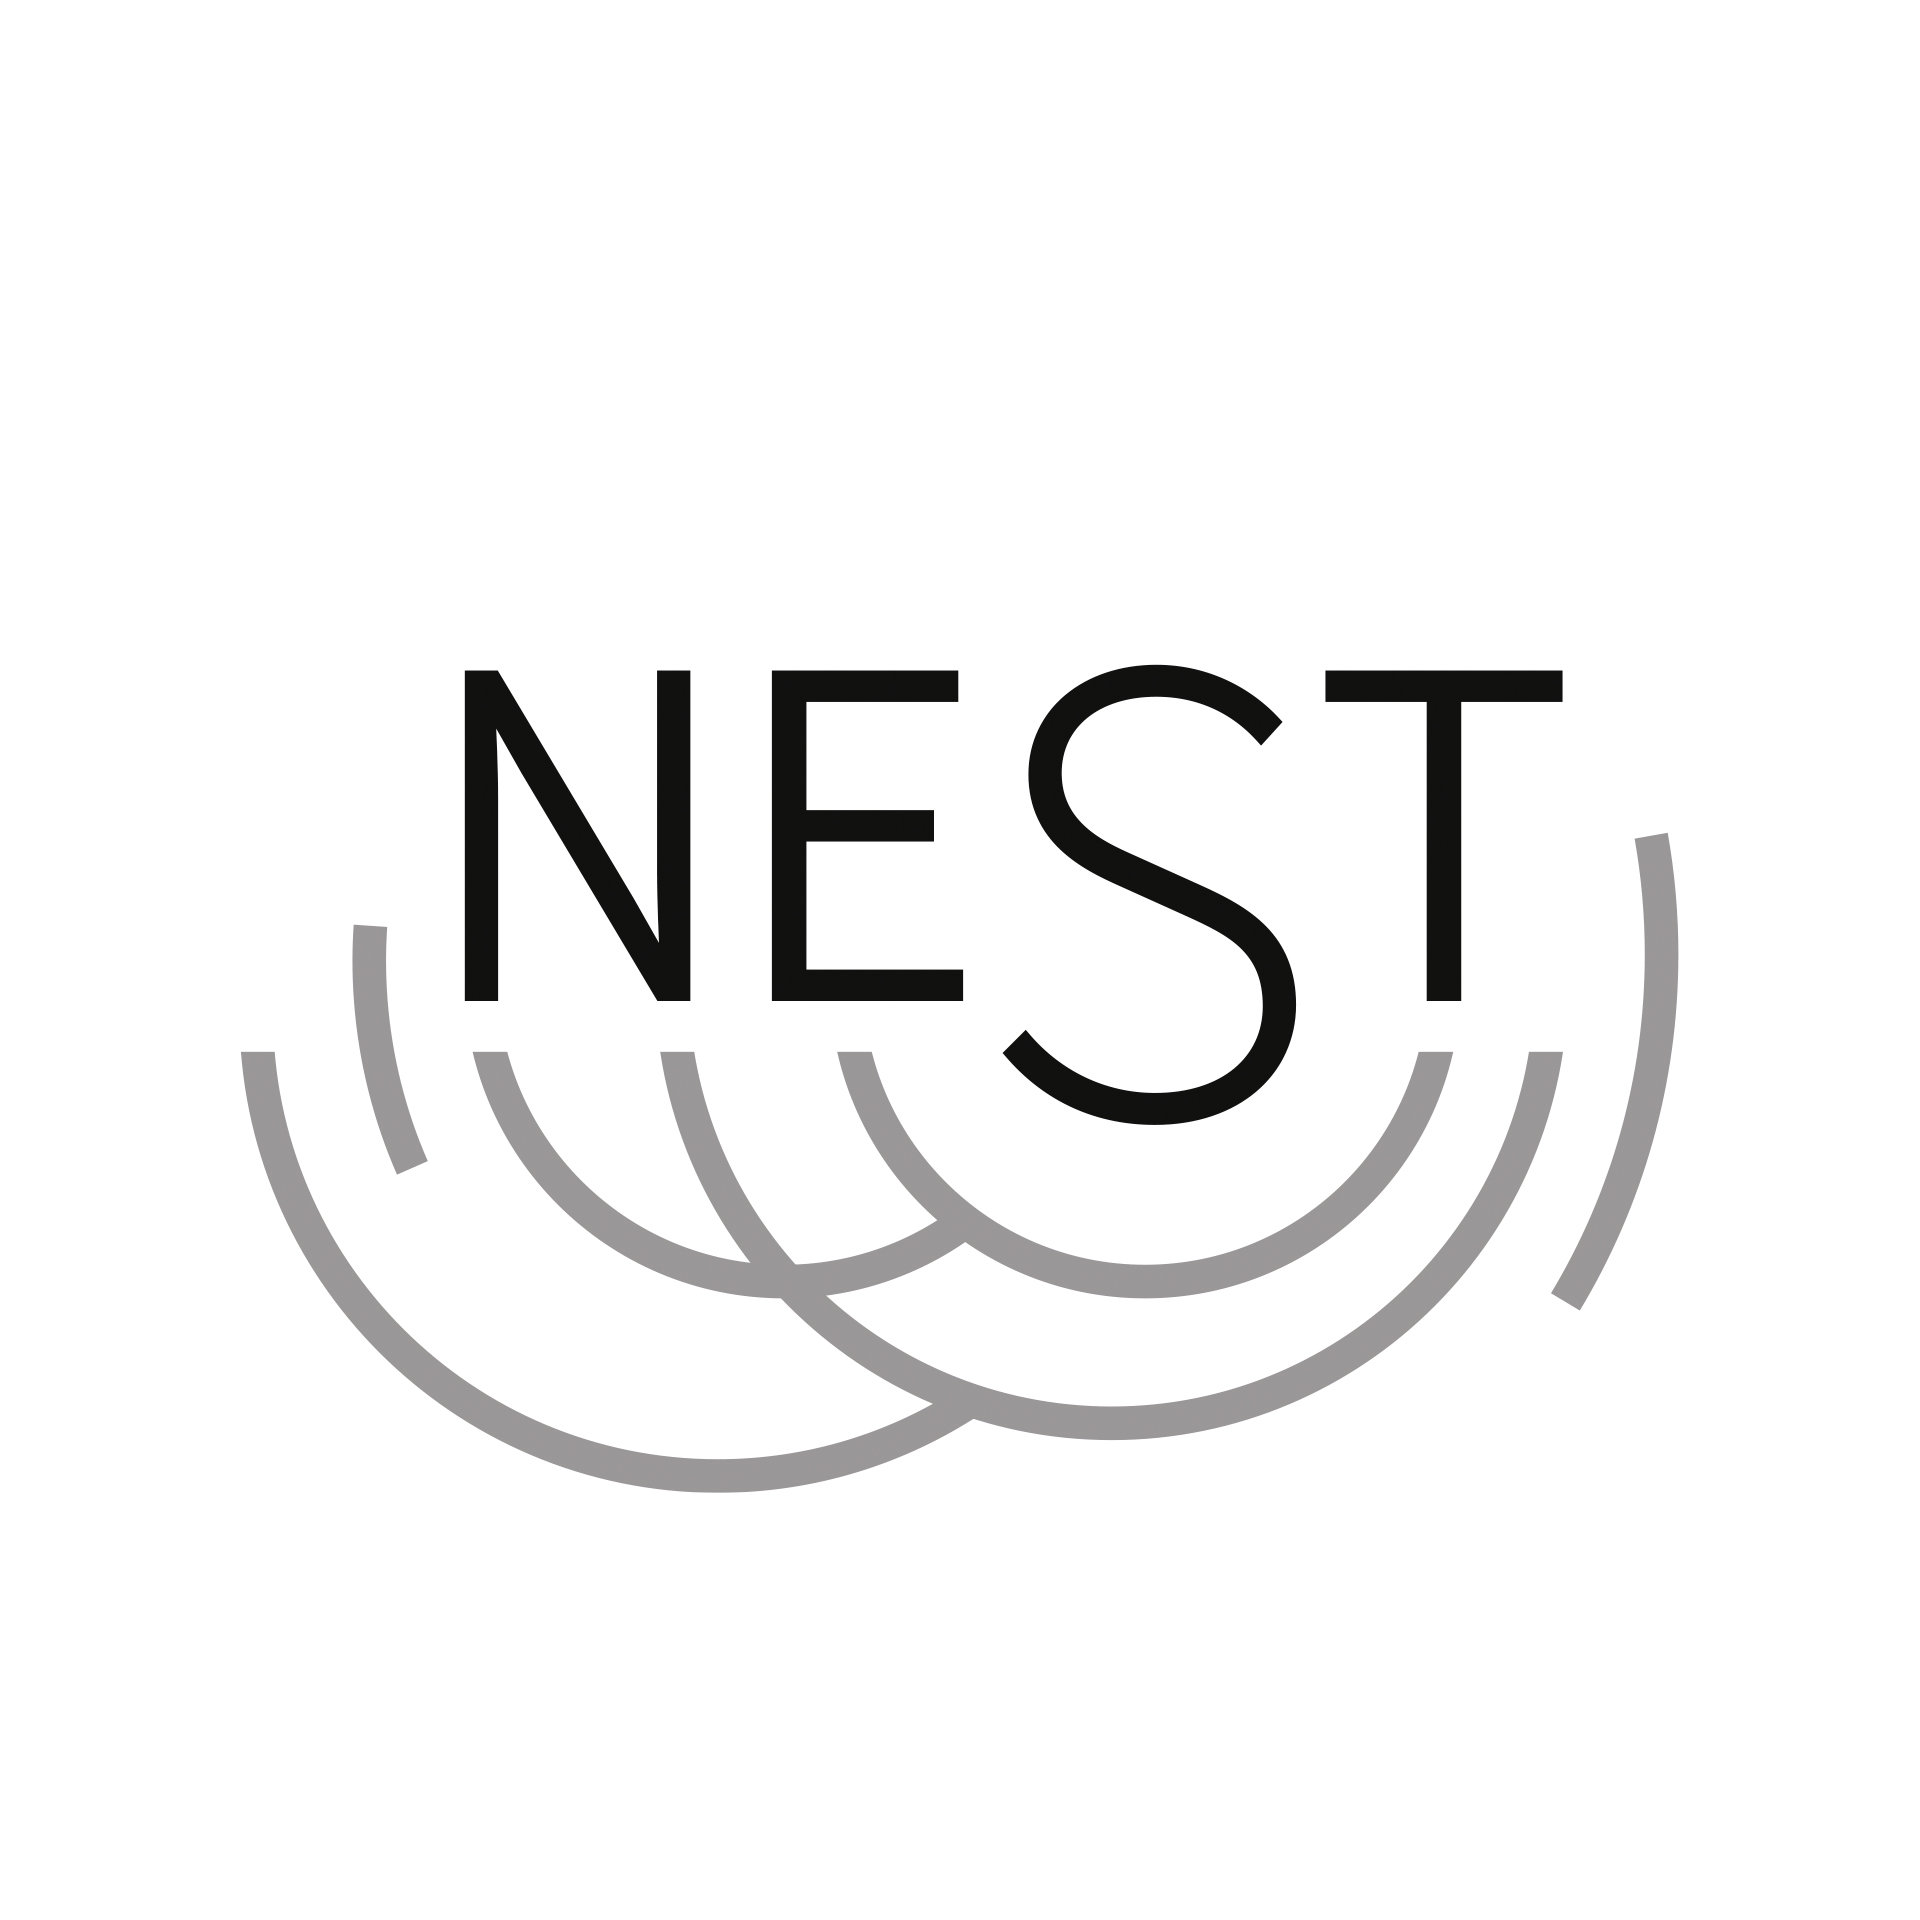 Diseño-logotipo-nest-asis-bastida